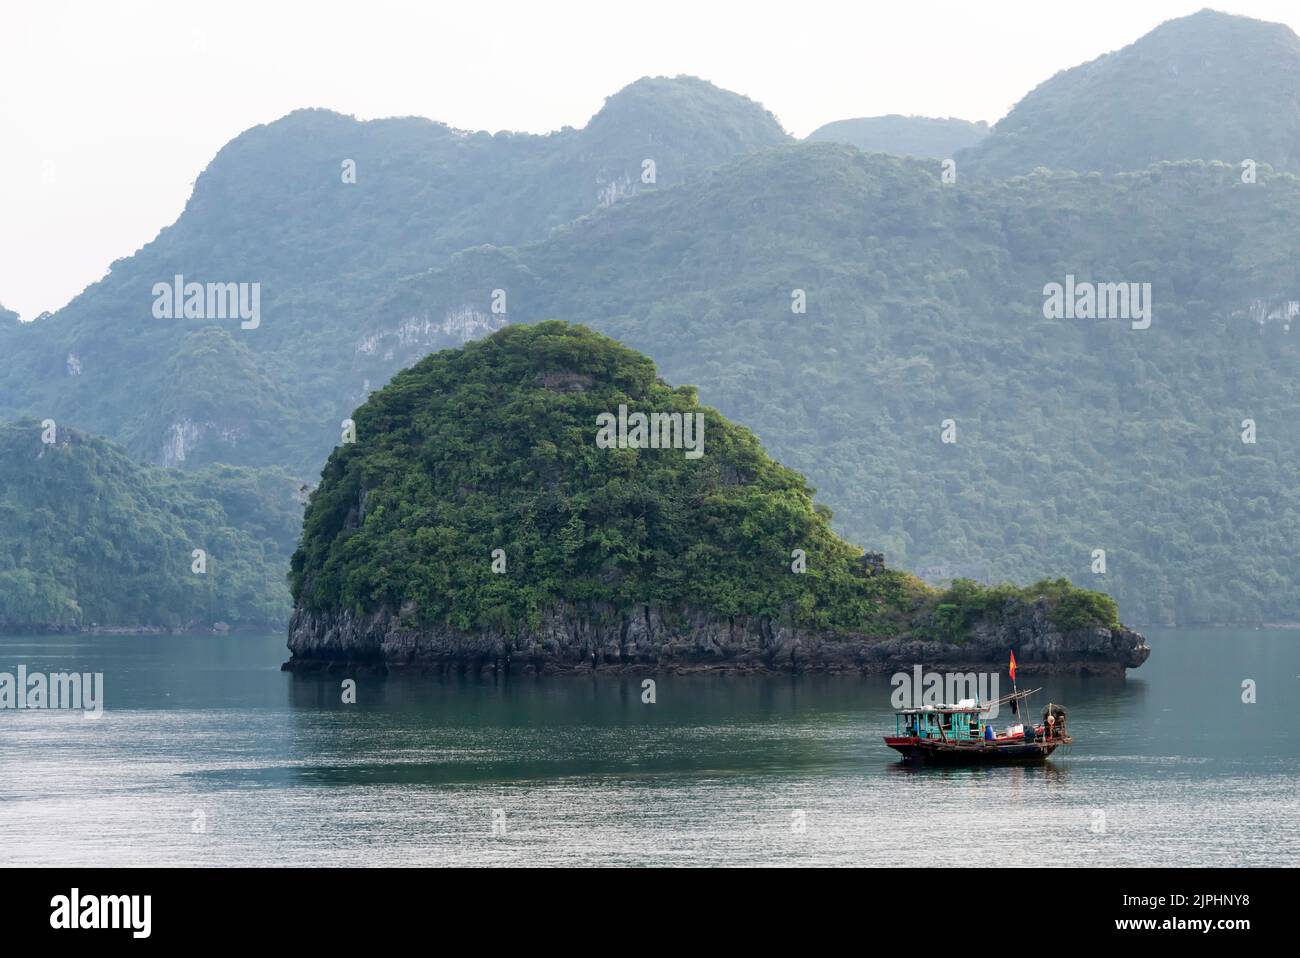 Fishing boat against whale shaped island Stock Photo